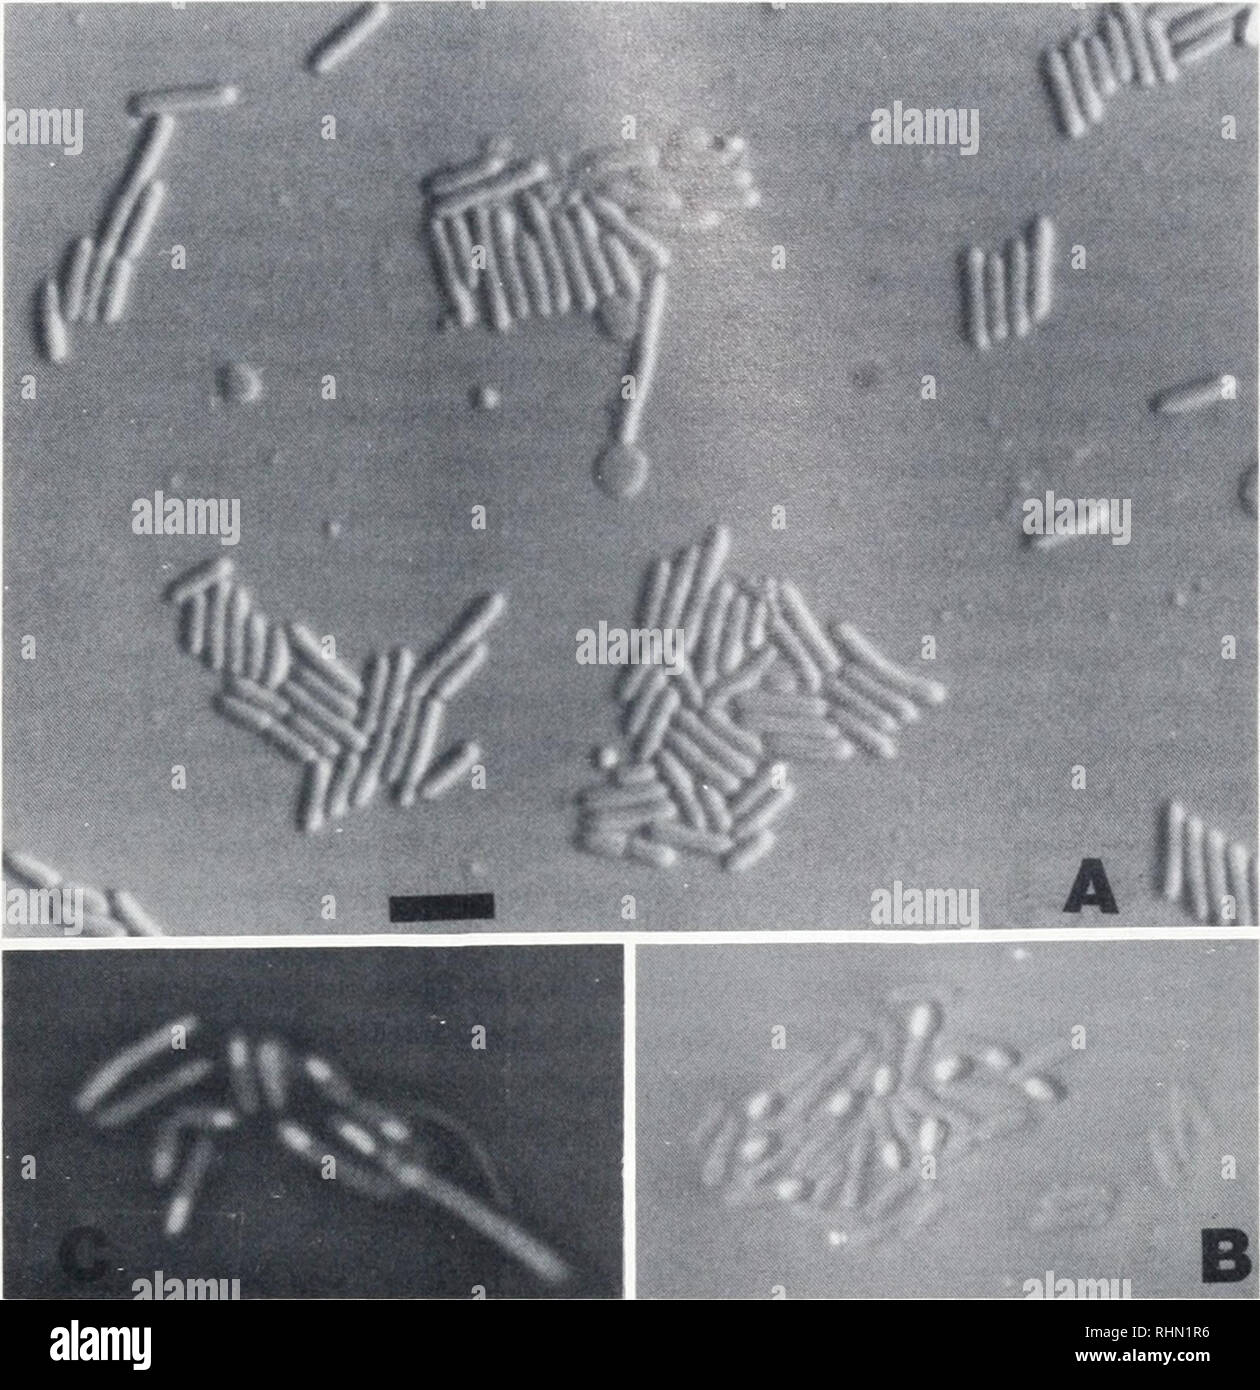 Nomarski microscopy fotografías e imágenes de alta resolución - Alamy